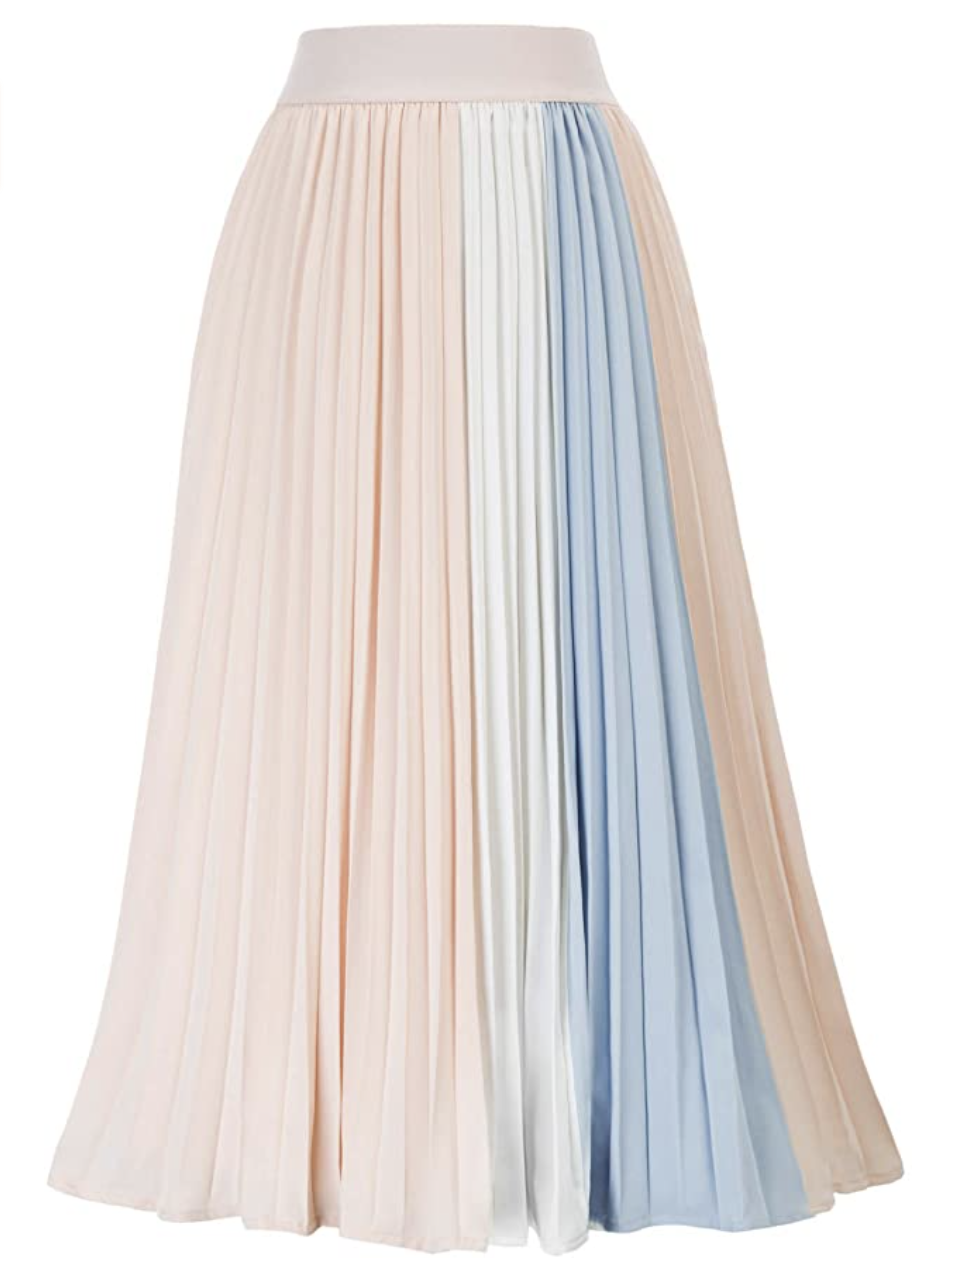 Kate Kasin Women's High Waist Pleated A-Line Swing Skirt